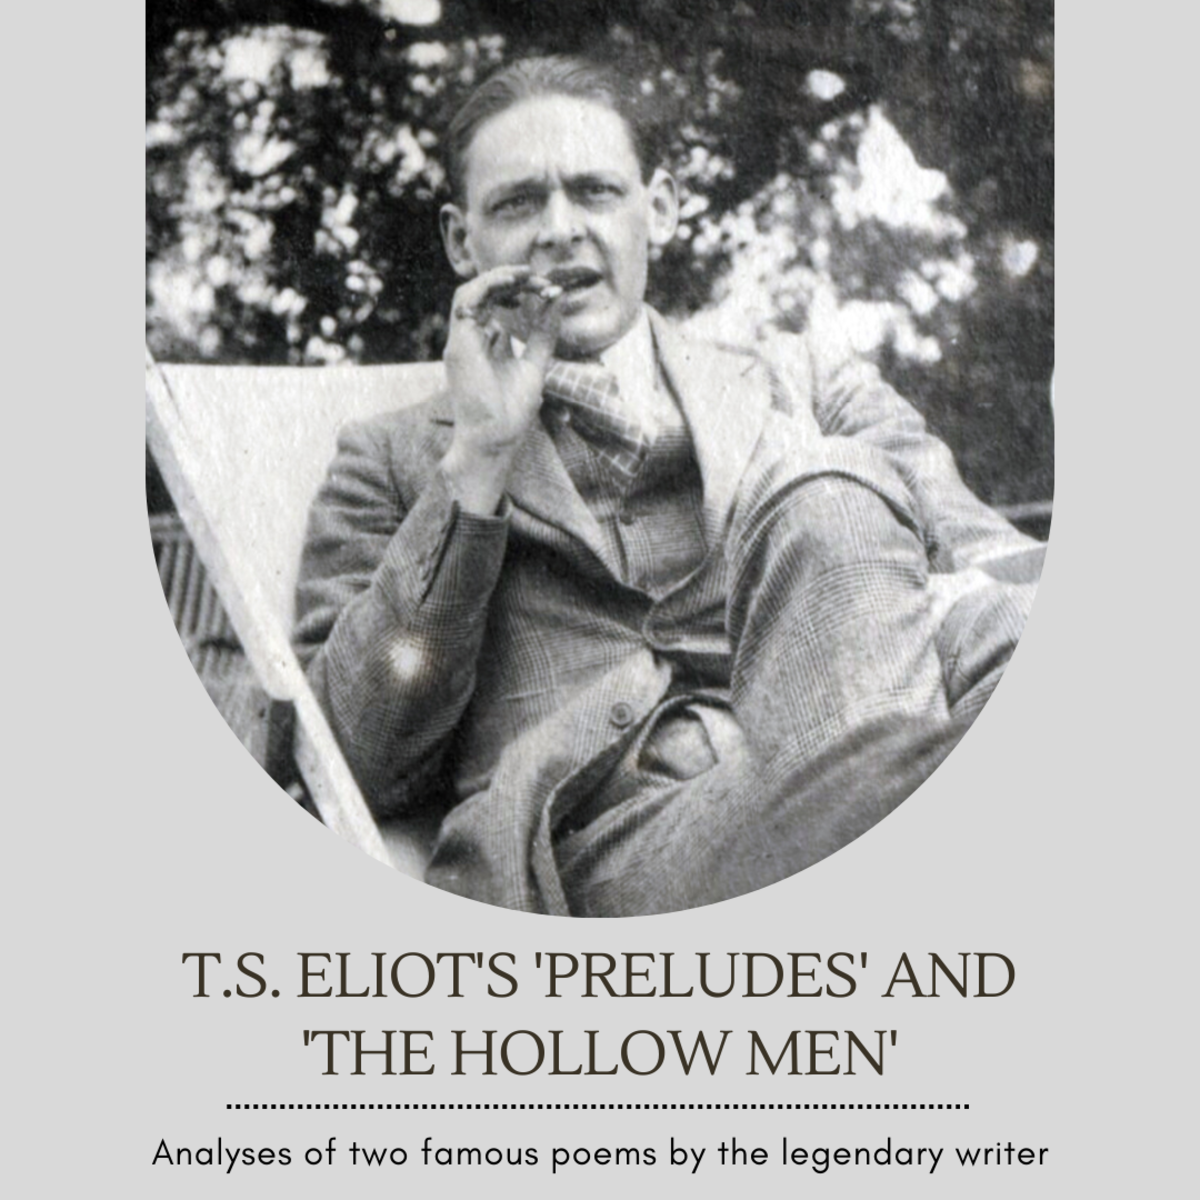 Analysing Thomas Eliot's (T.S. Eliot) Poems: 'The Hollow Men' and 'Preludes'